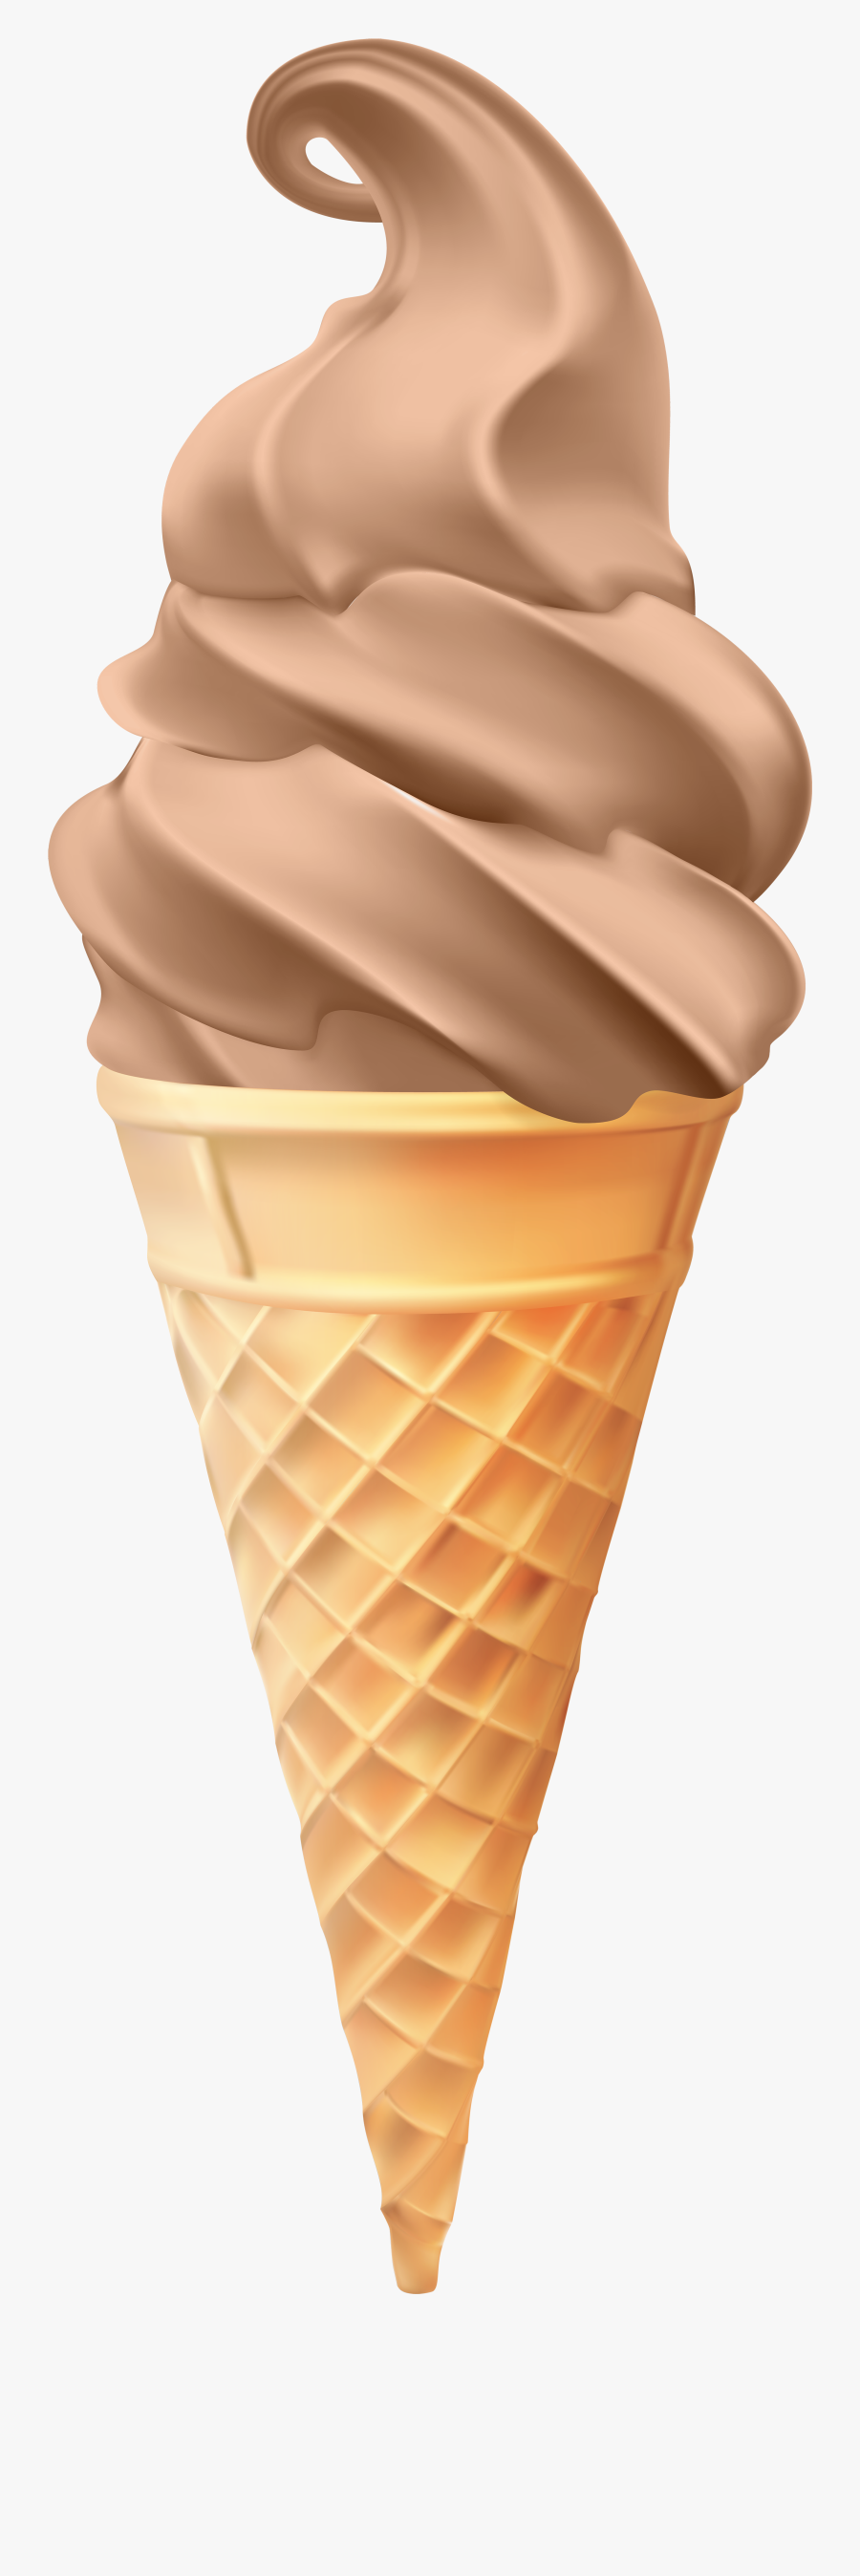 Ice Cream Png Free, Transparent Clipart